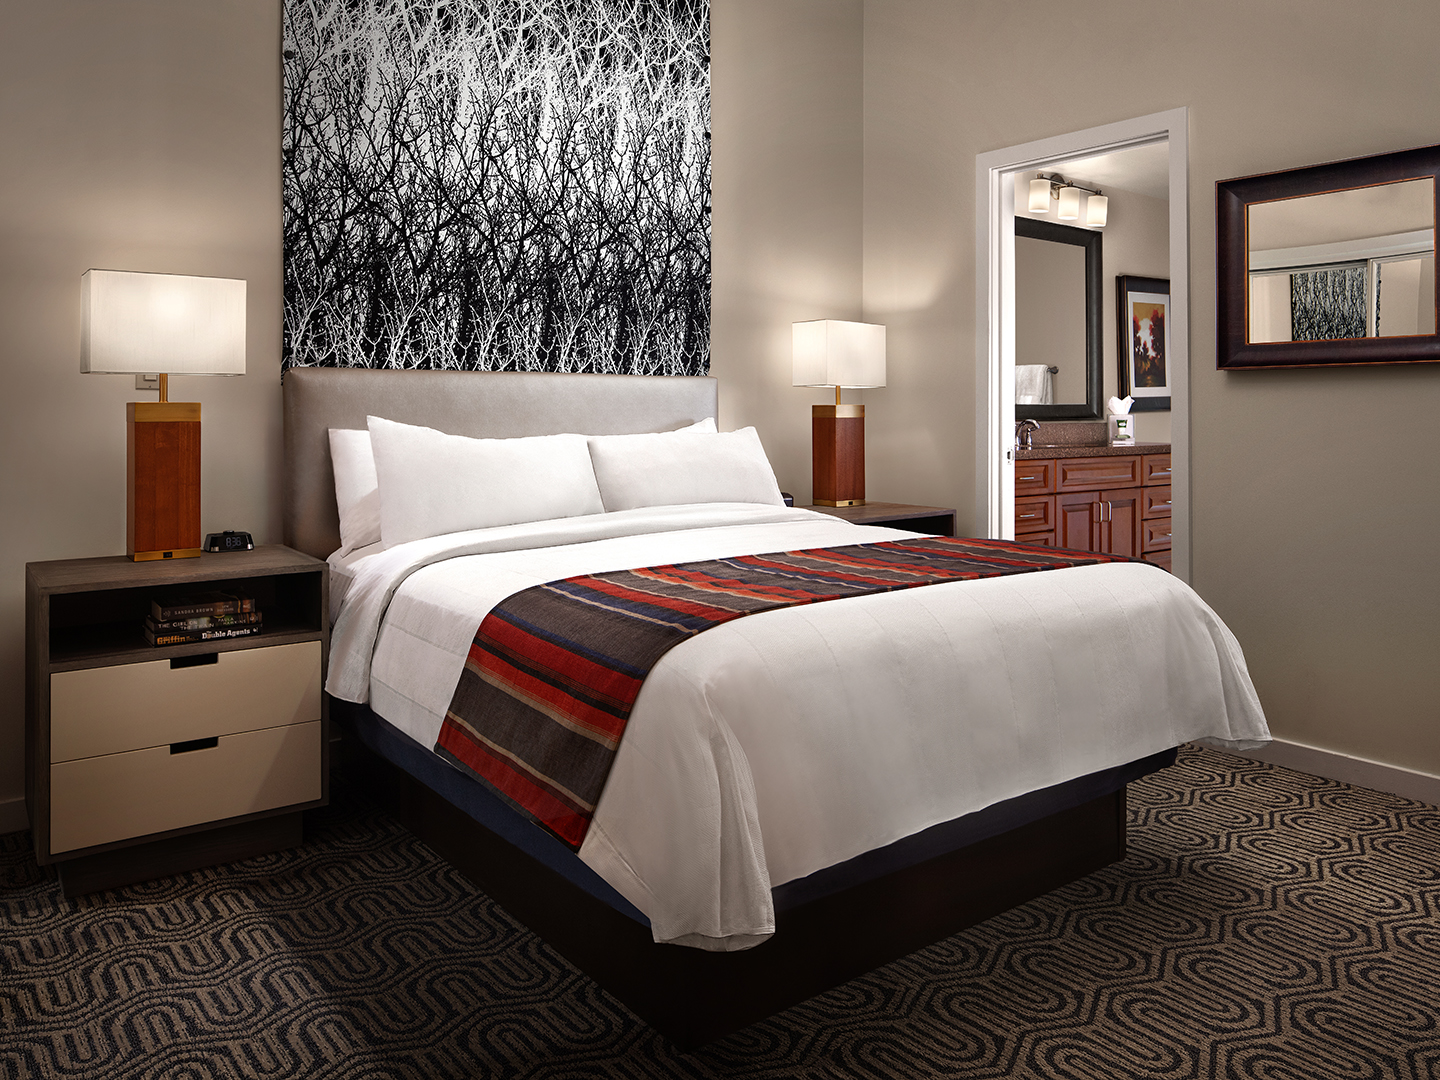 Marriott's StreamSide - Birch 2-Bedroom Loft/Bedroom, Douglas. Marriott's StreamSide - Birch is located in Vail, Colorado United States.